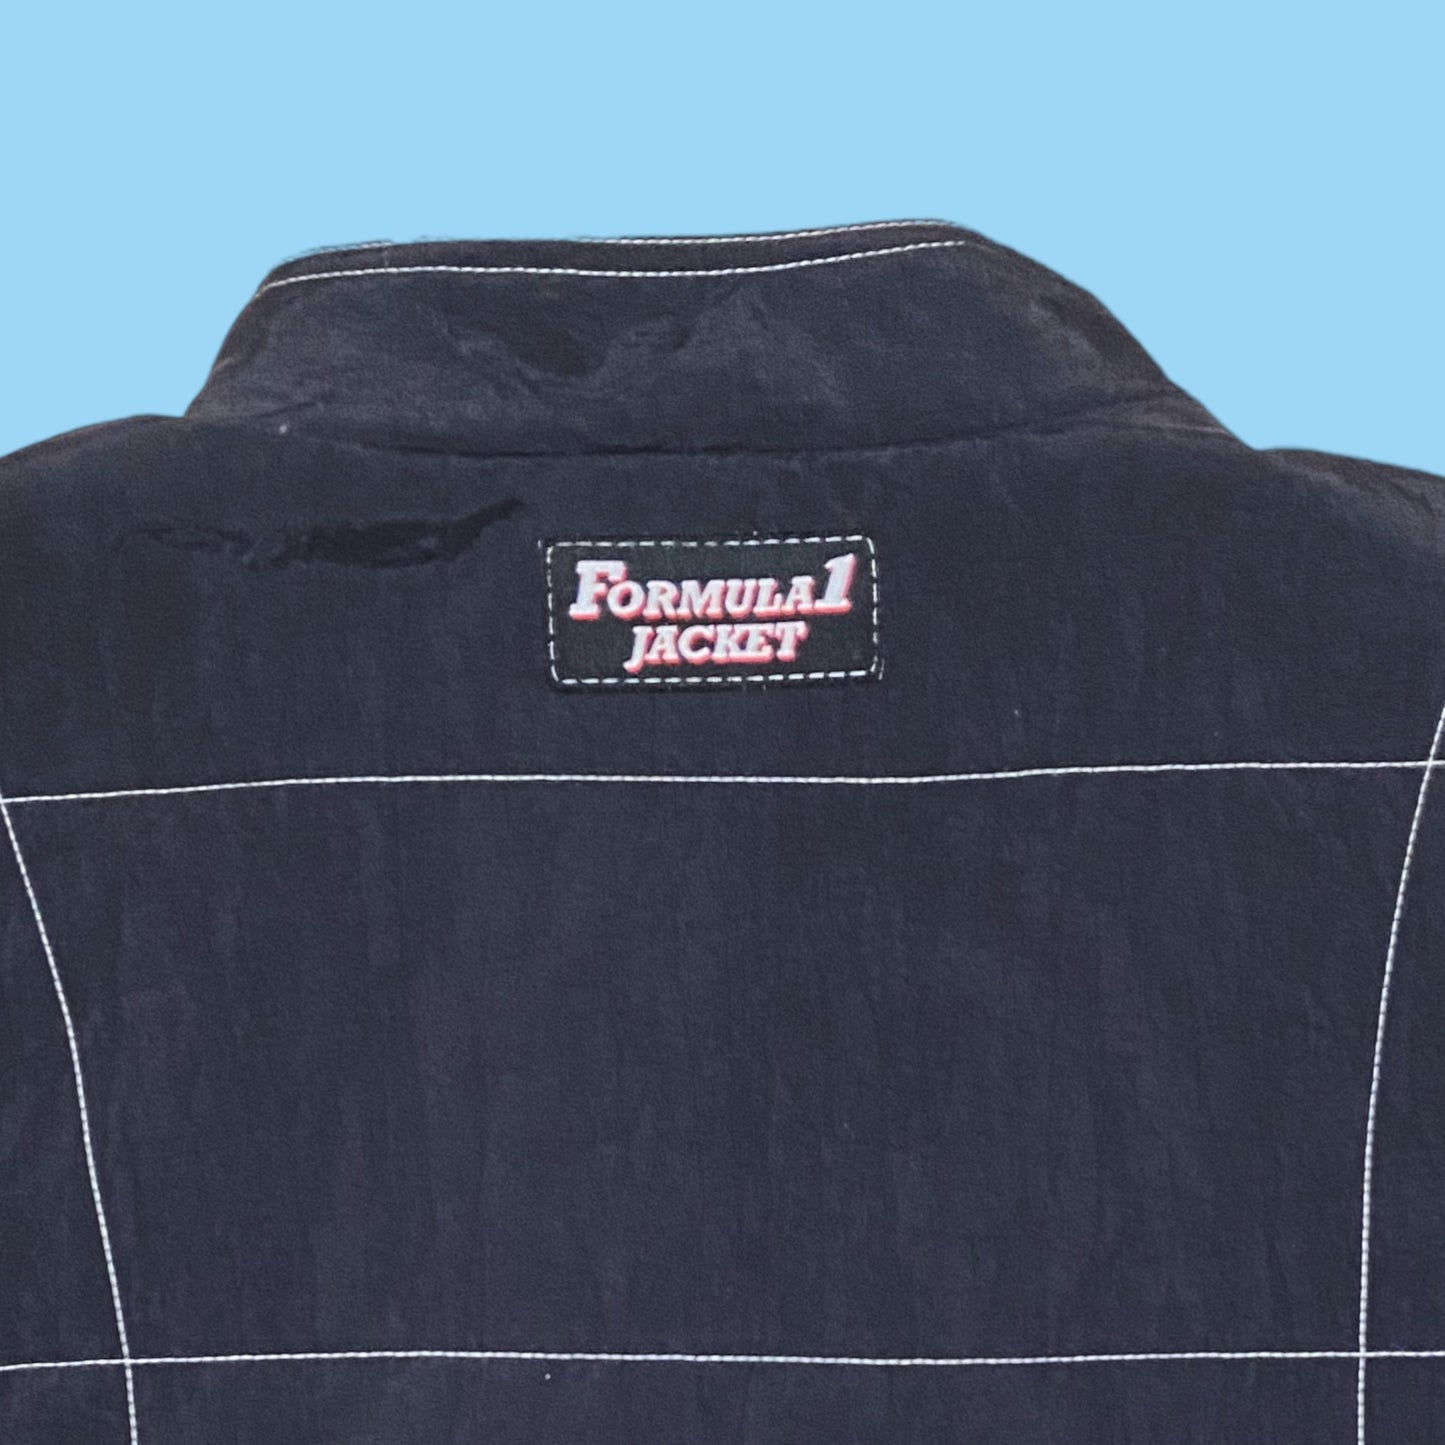 Vintage Parmalat F1 racing team jacket - L